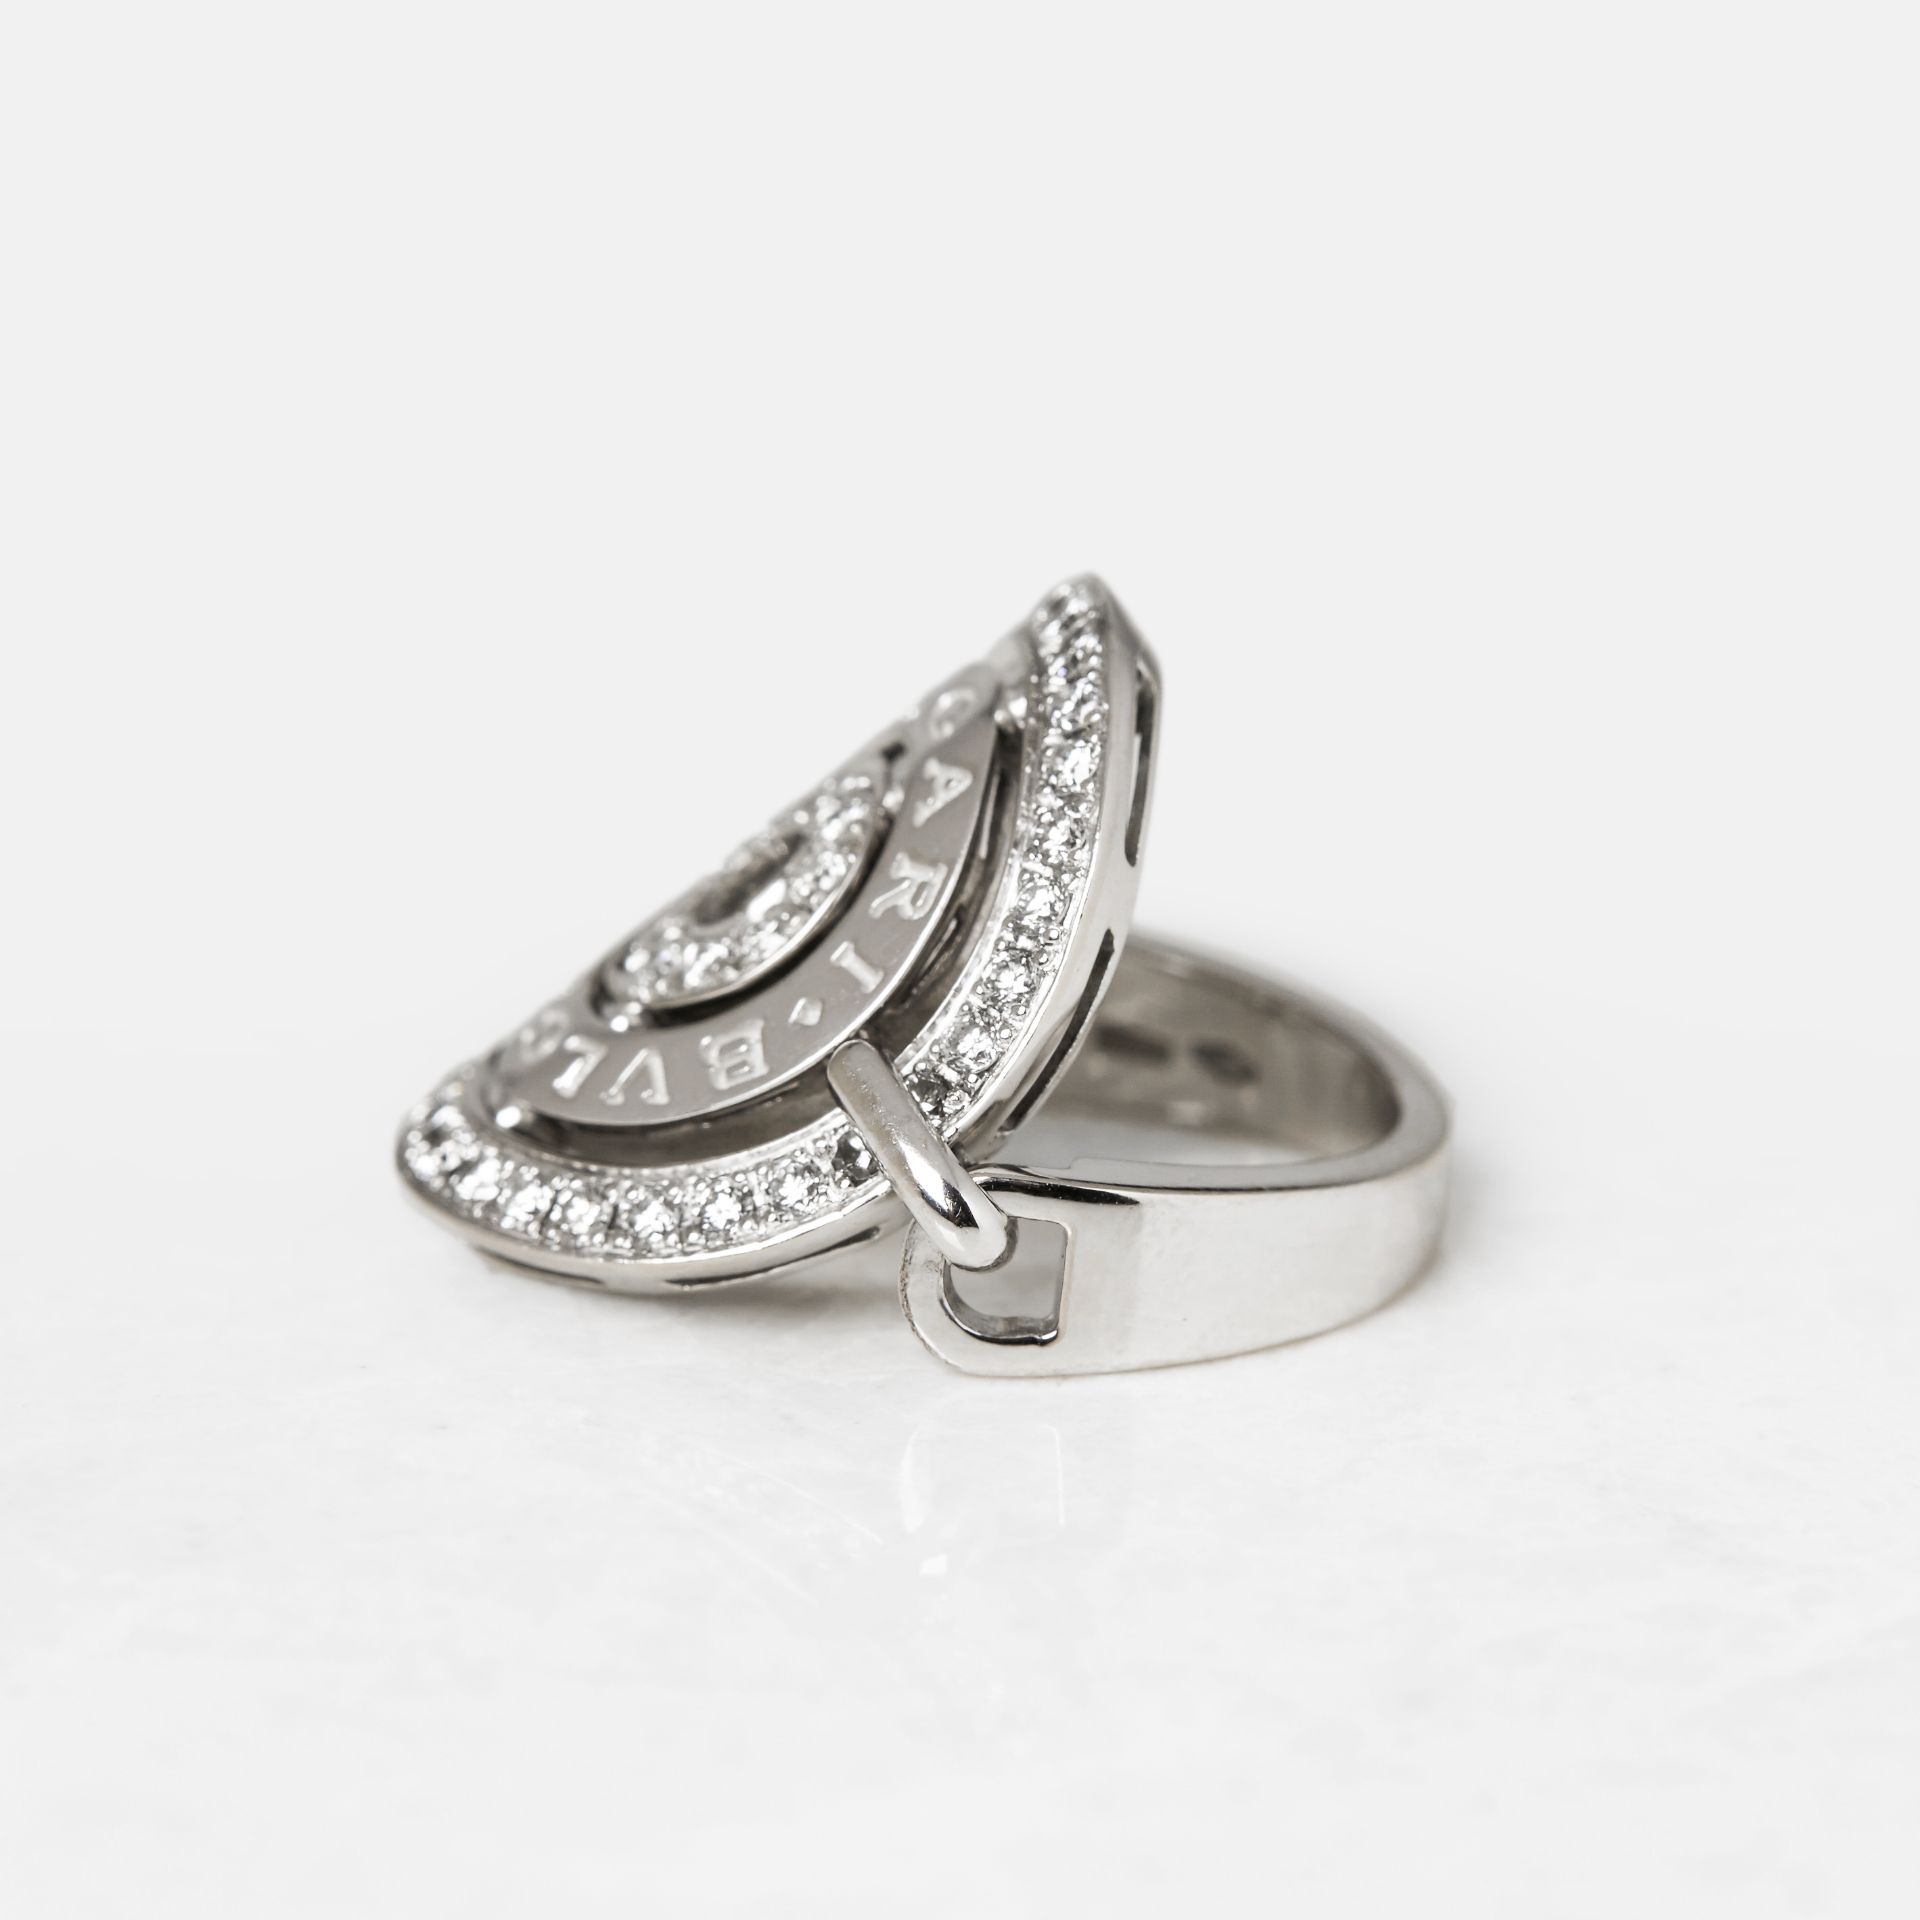 Bulgari 18k White Gold Diamond Cerchi Ring - Image 11 of 12